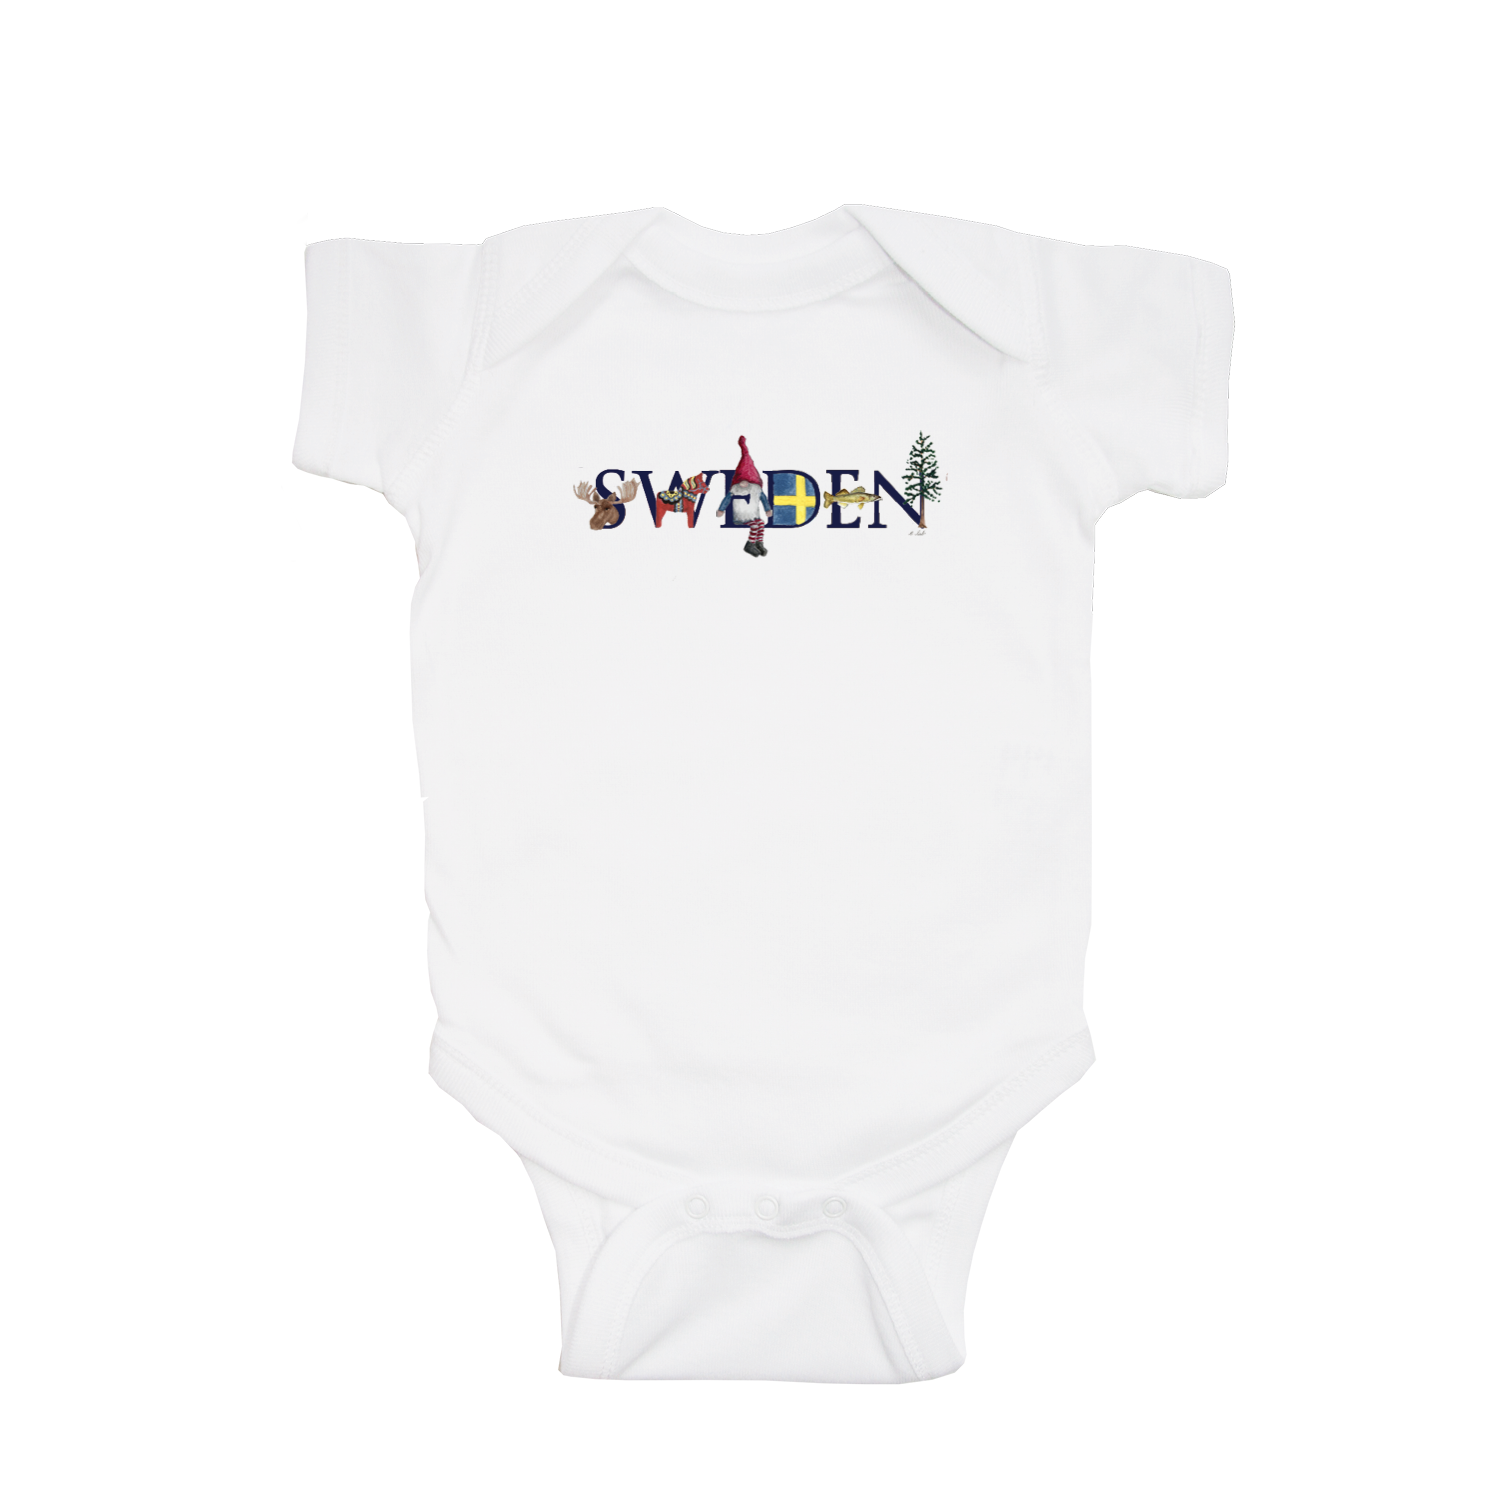 Sweden baby snap up short sleeve